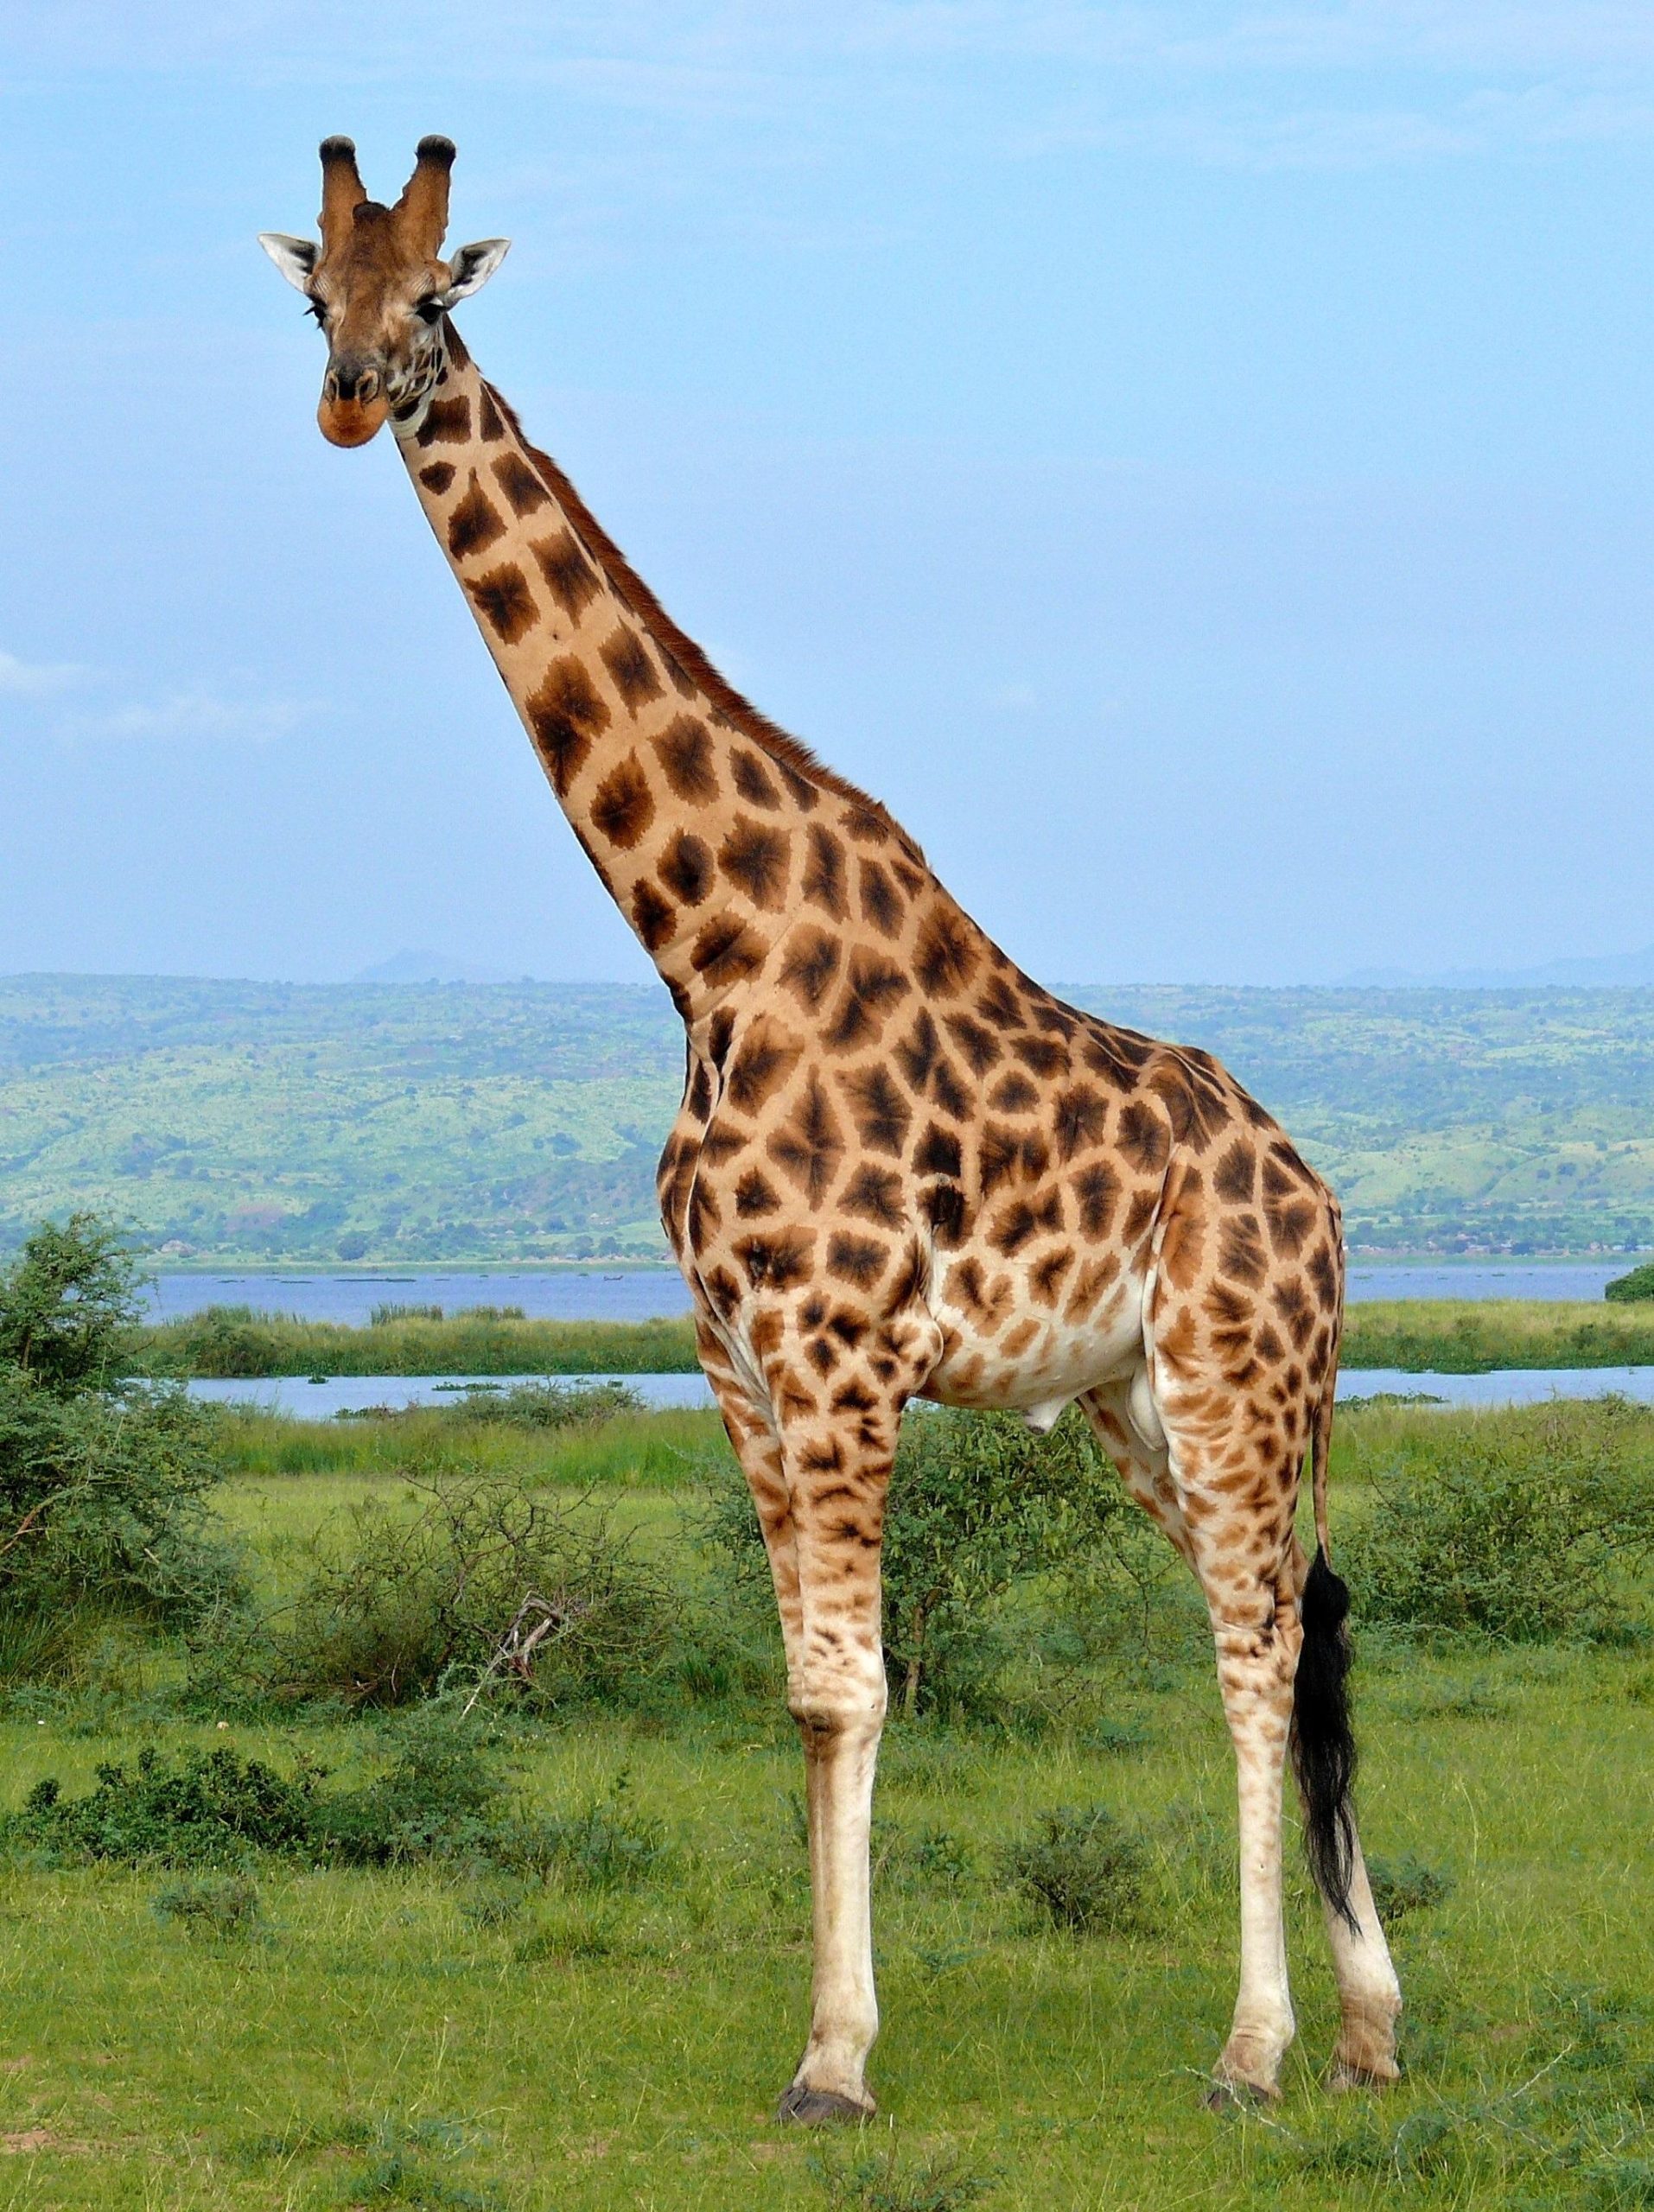 член у жирафа длина фото 79